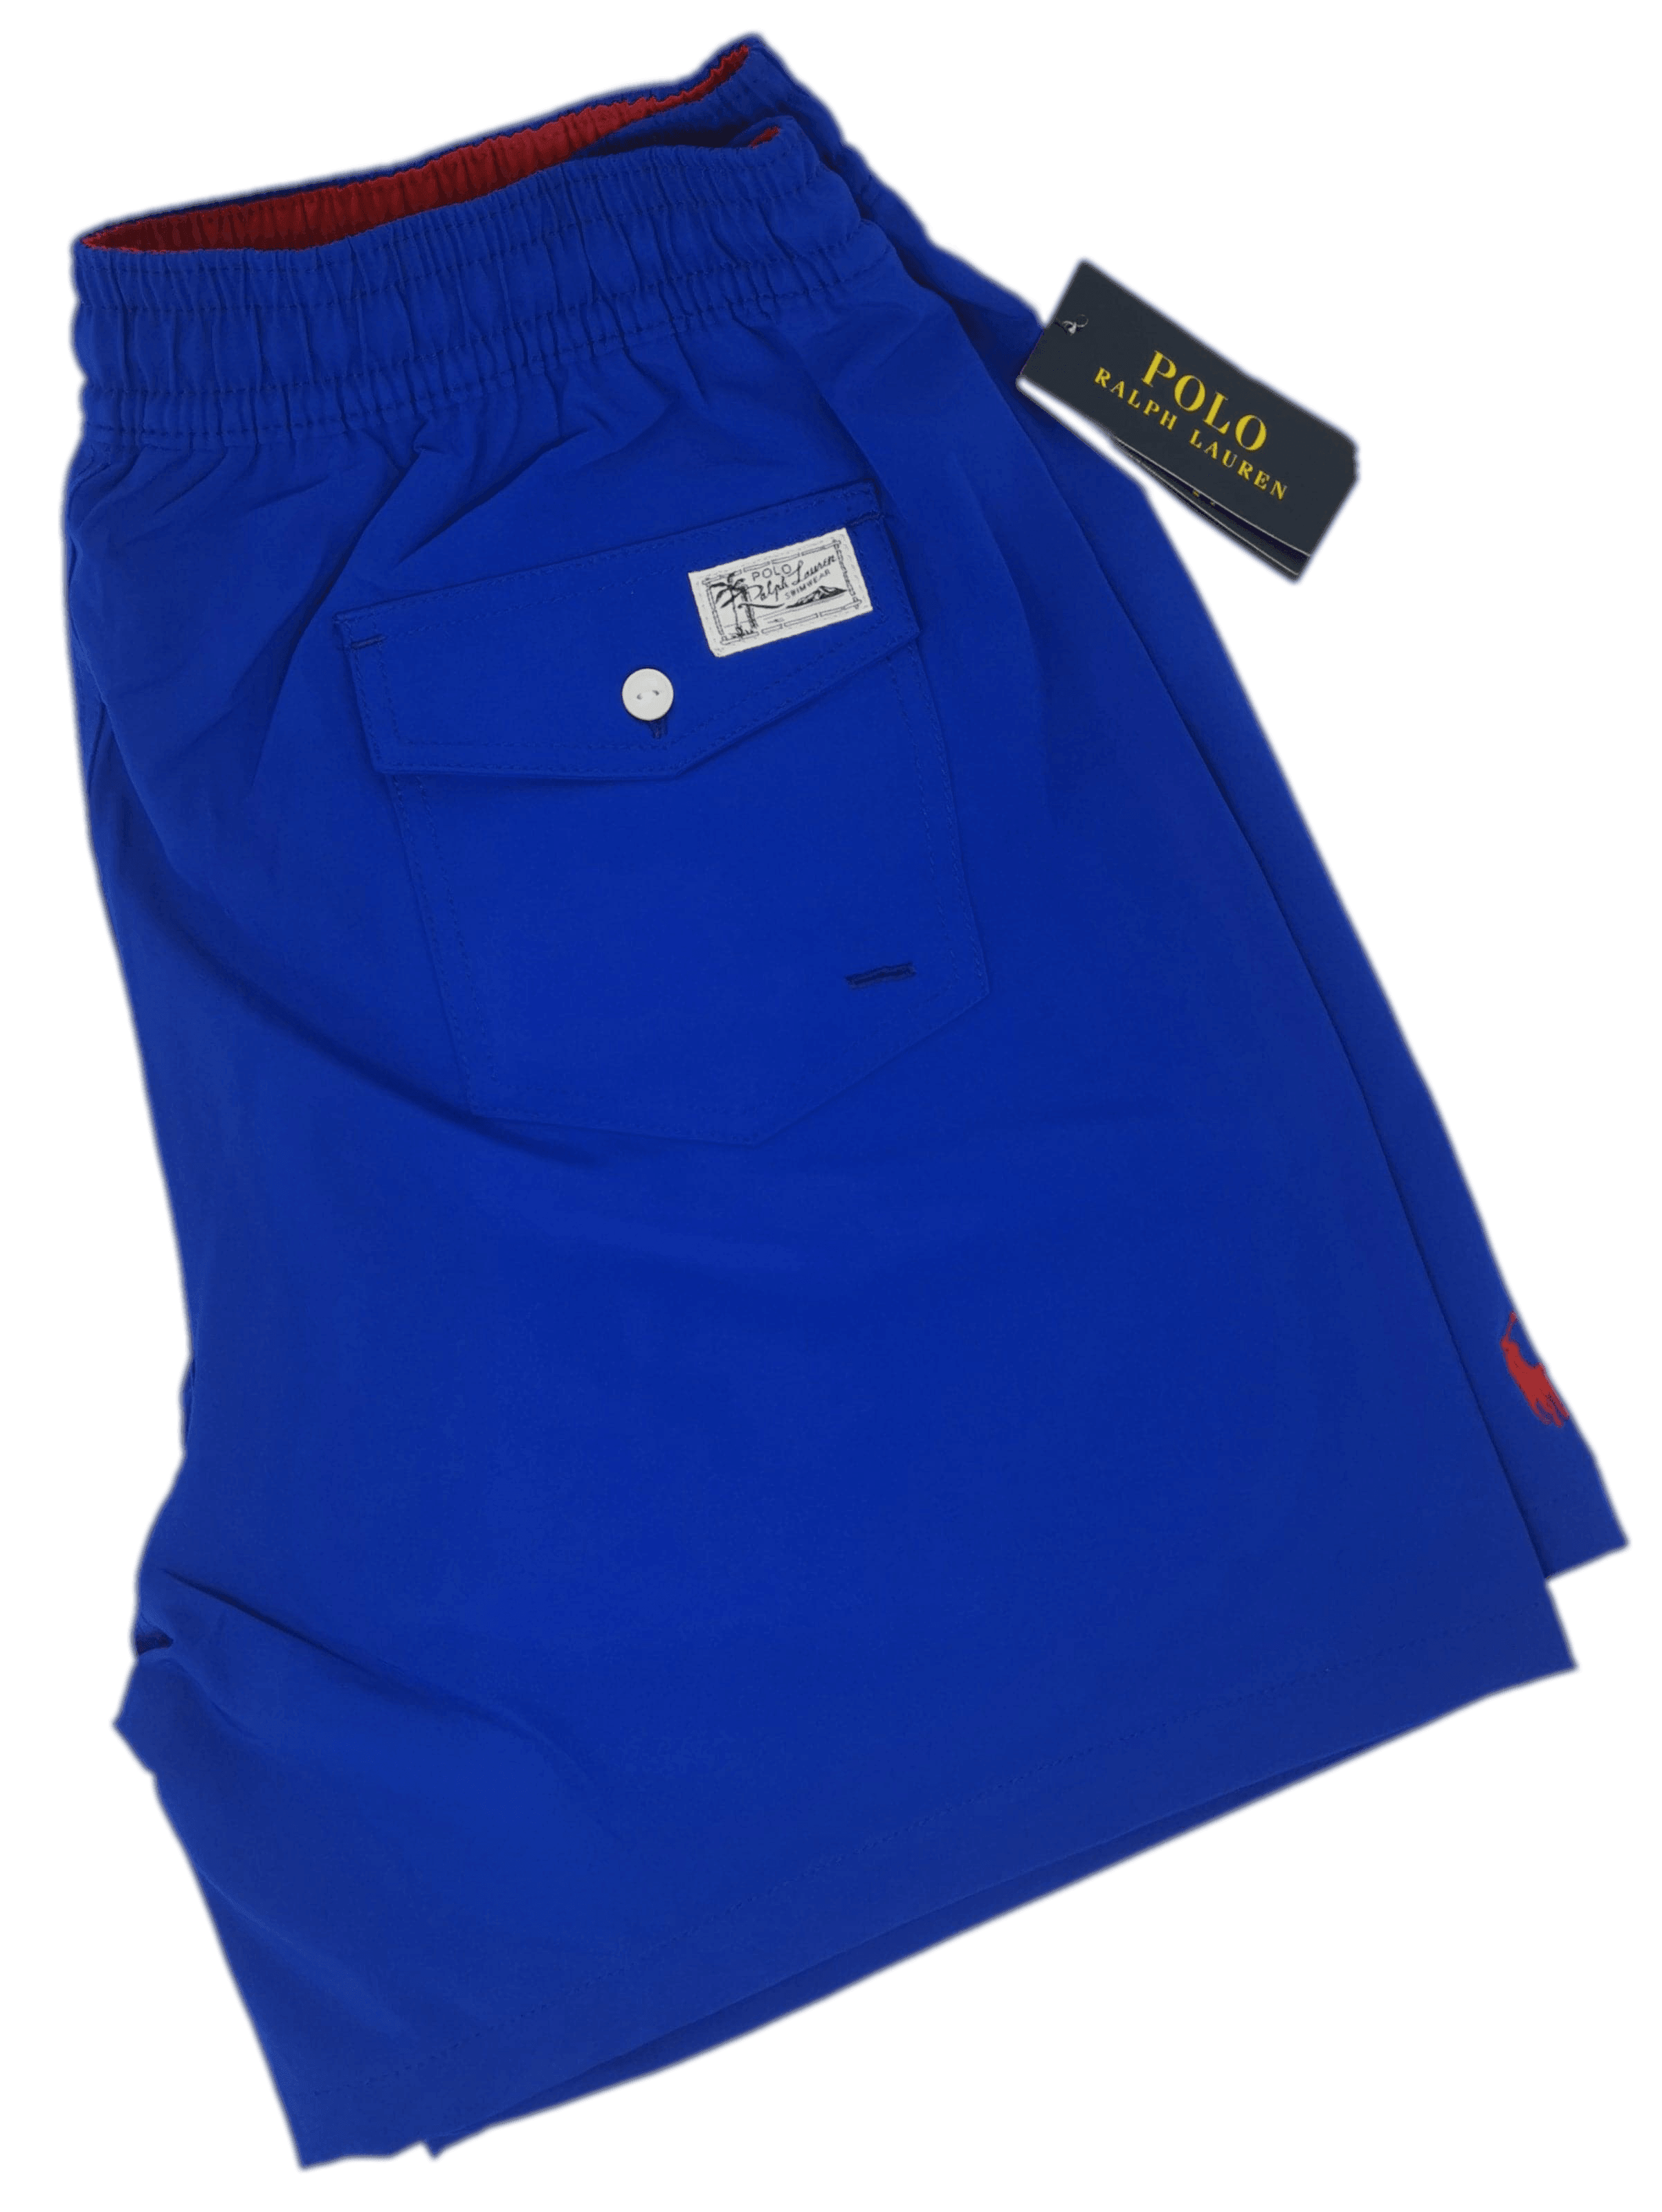 Laflamme- Bermuda maillot de plage bleu - Ralph lauren